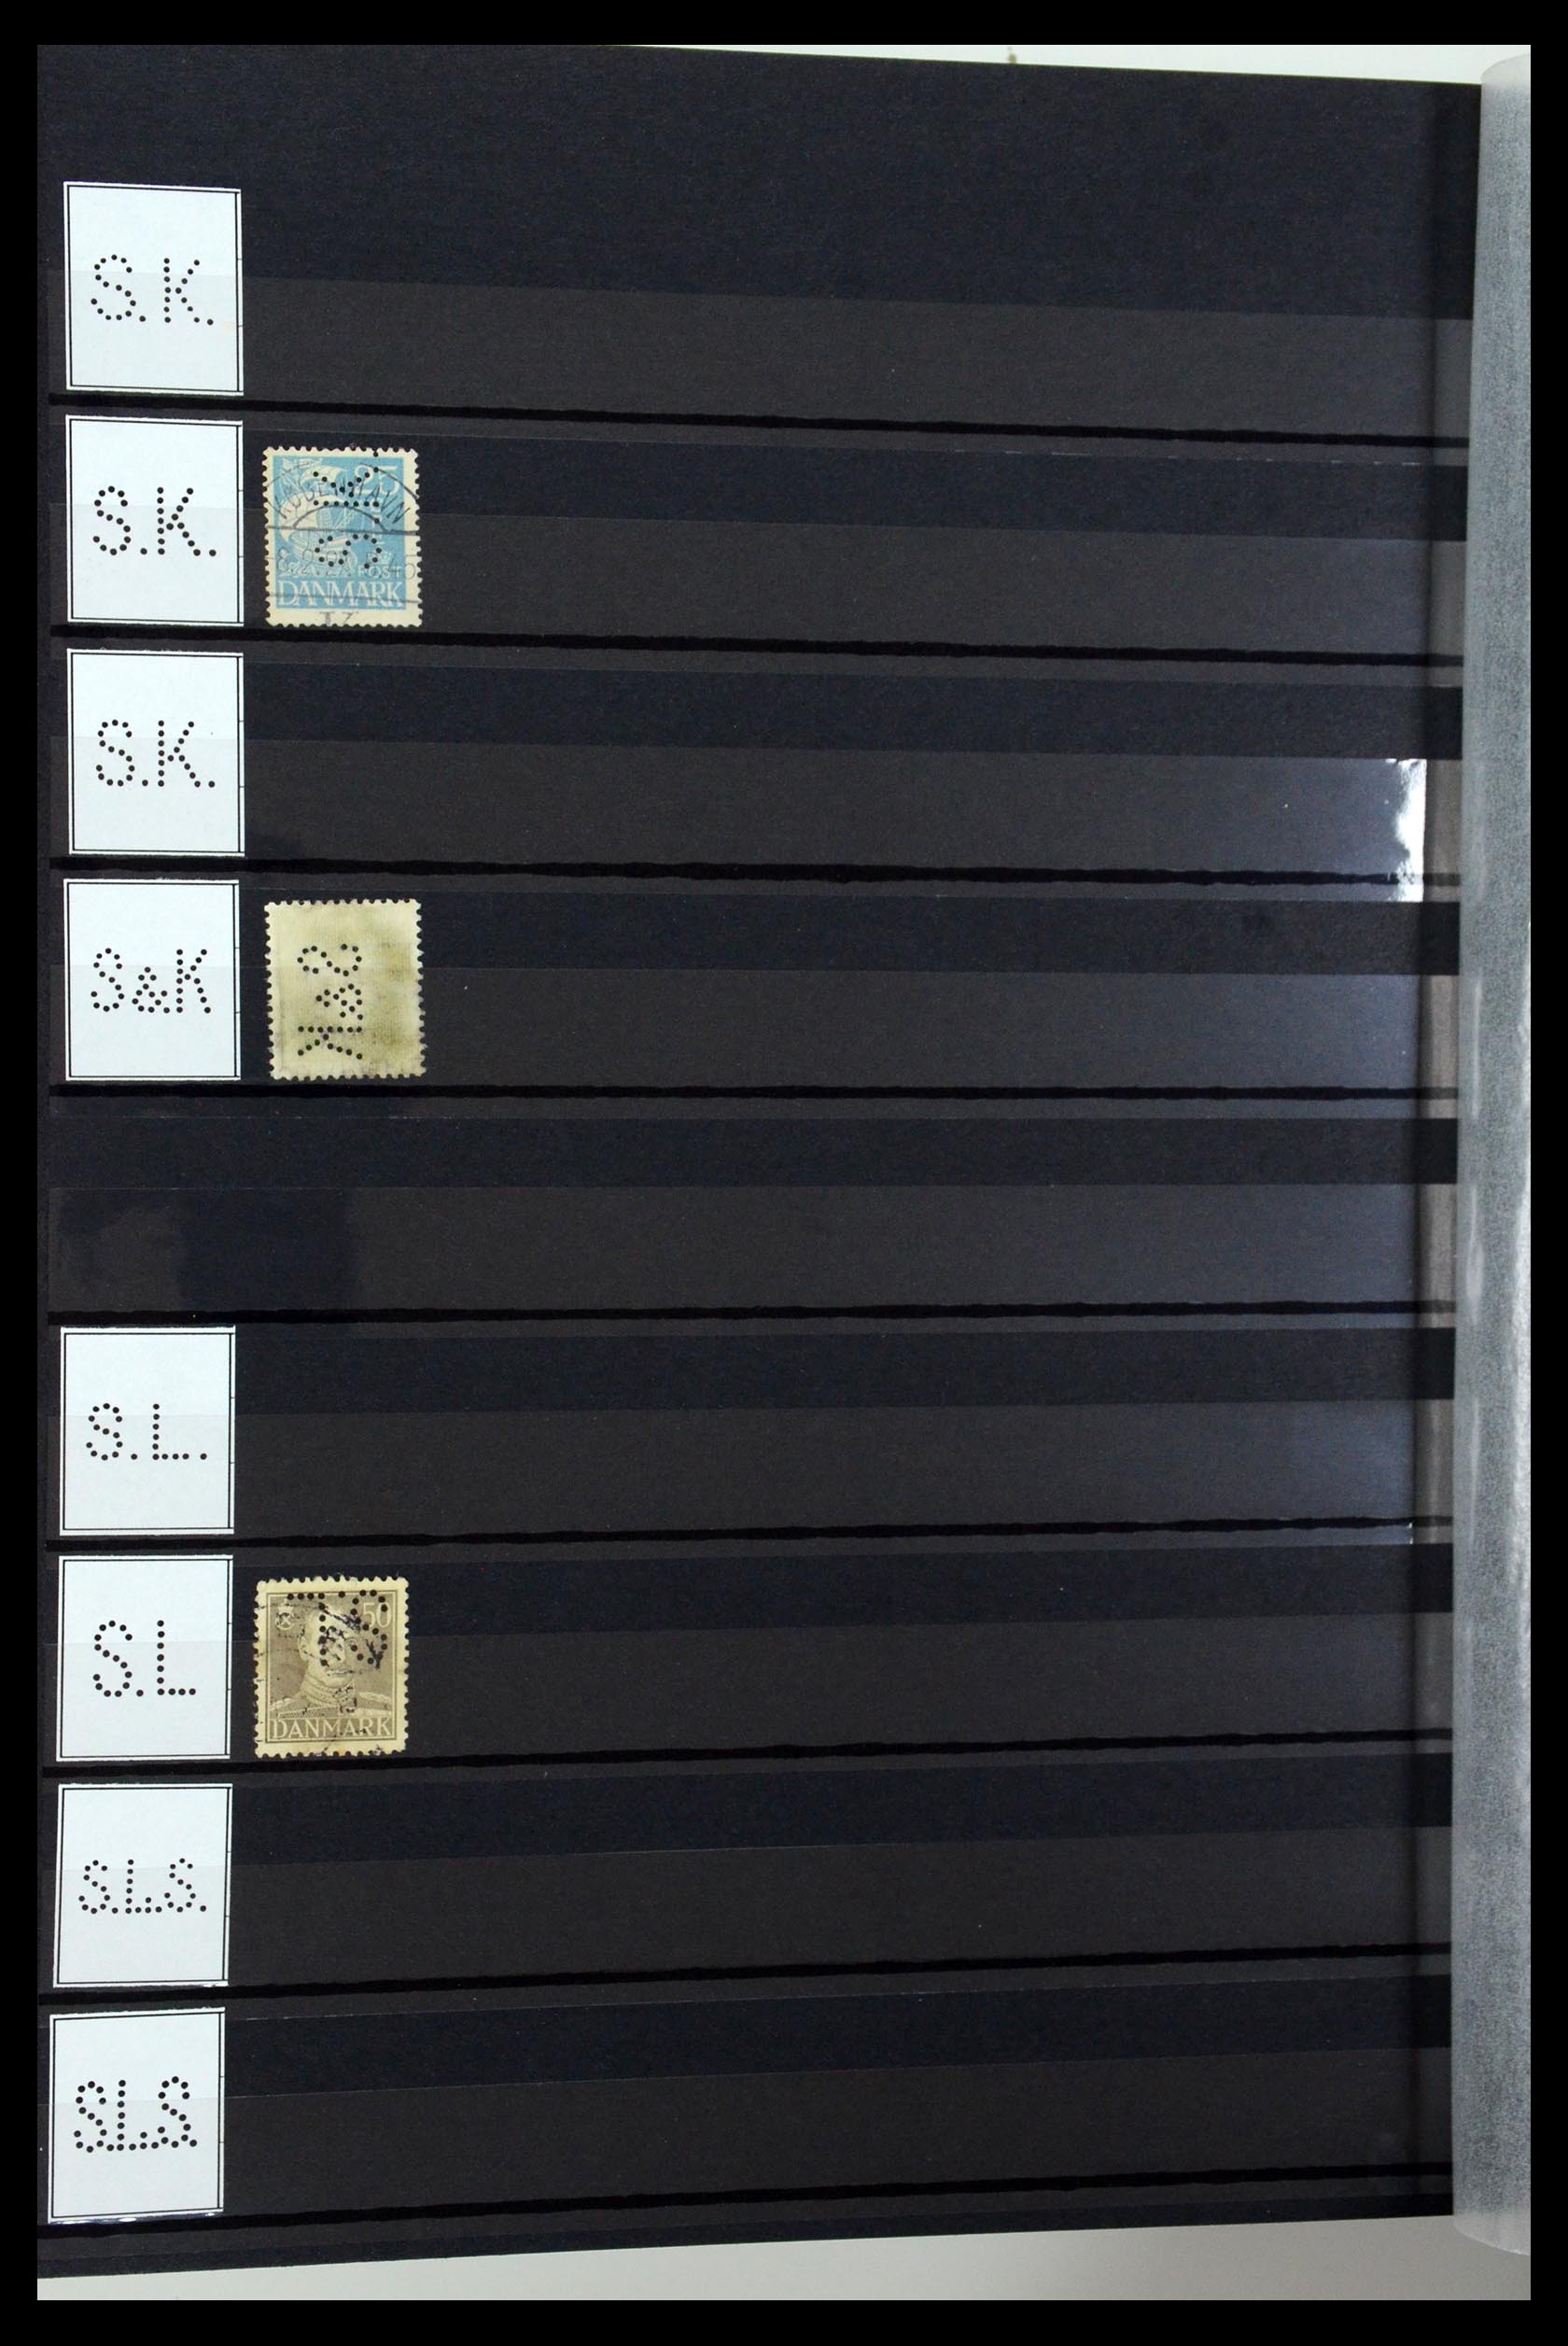 36396 208 - Stamp collection 36396 Denmark perfins.